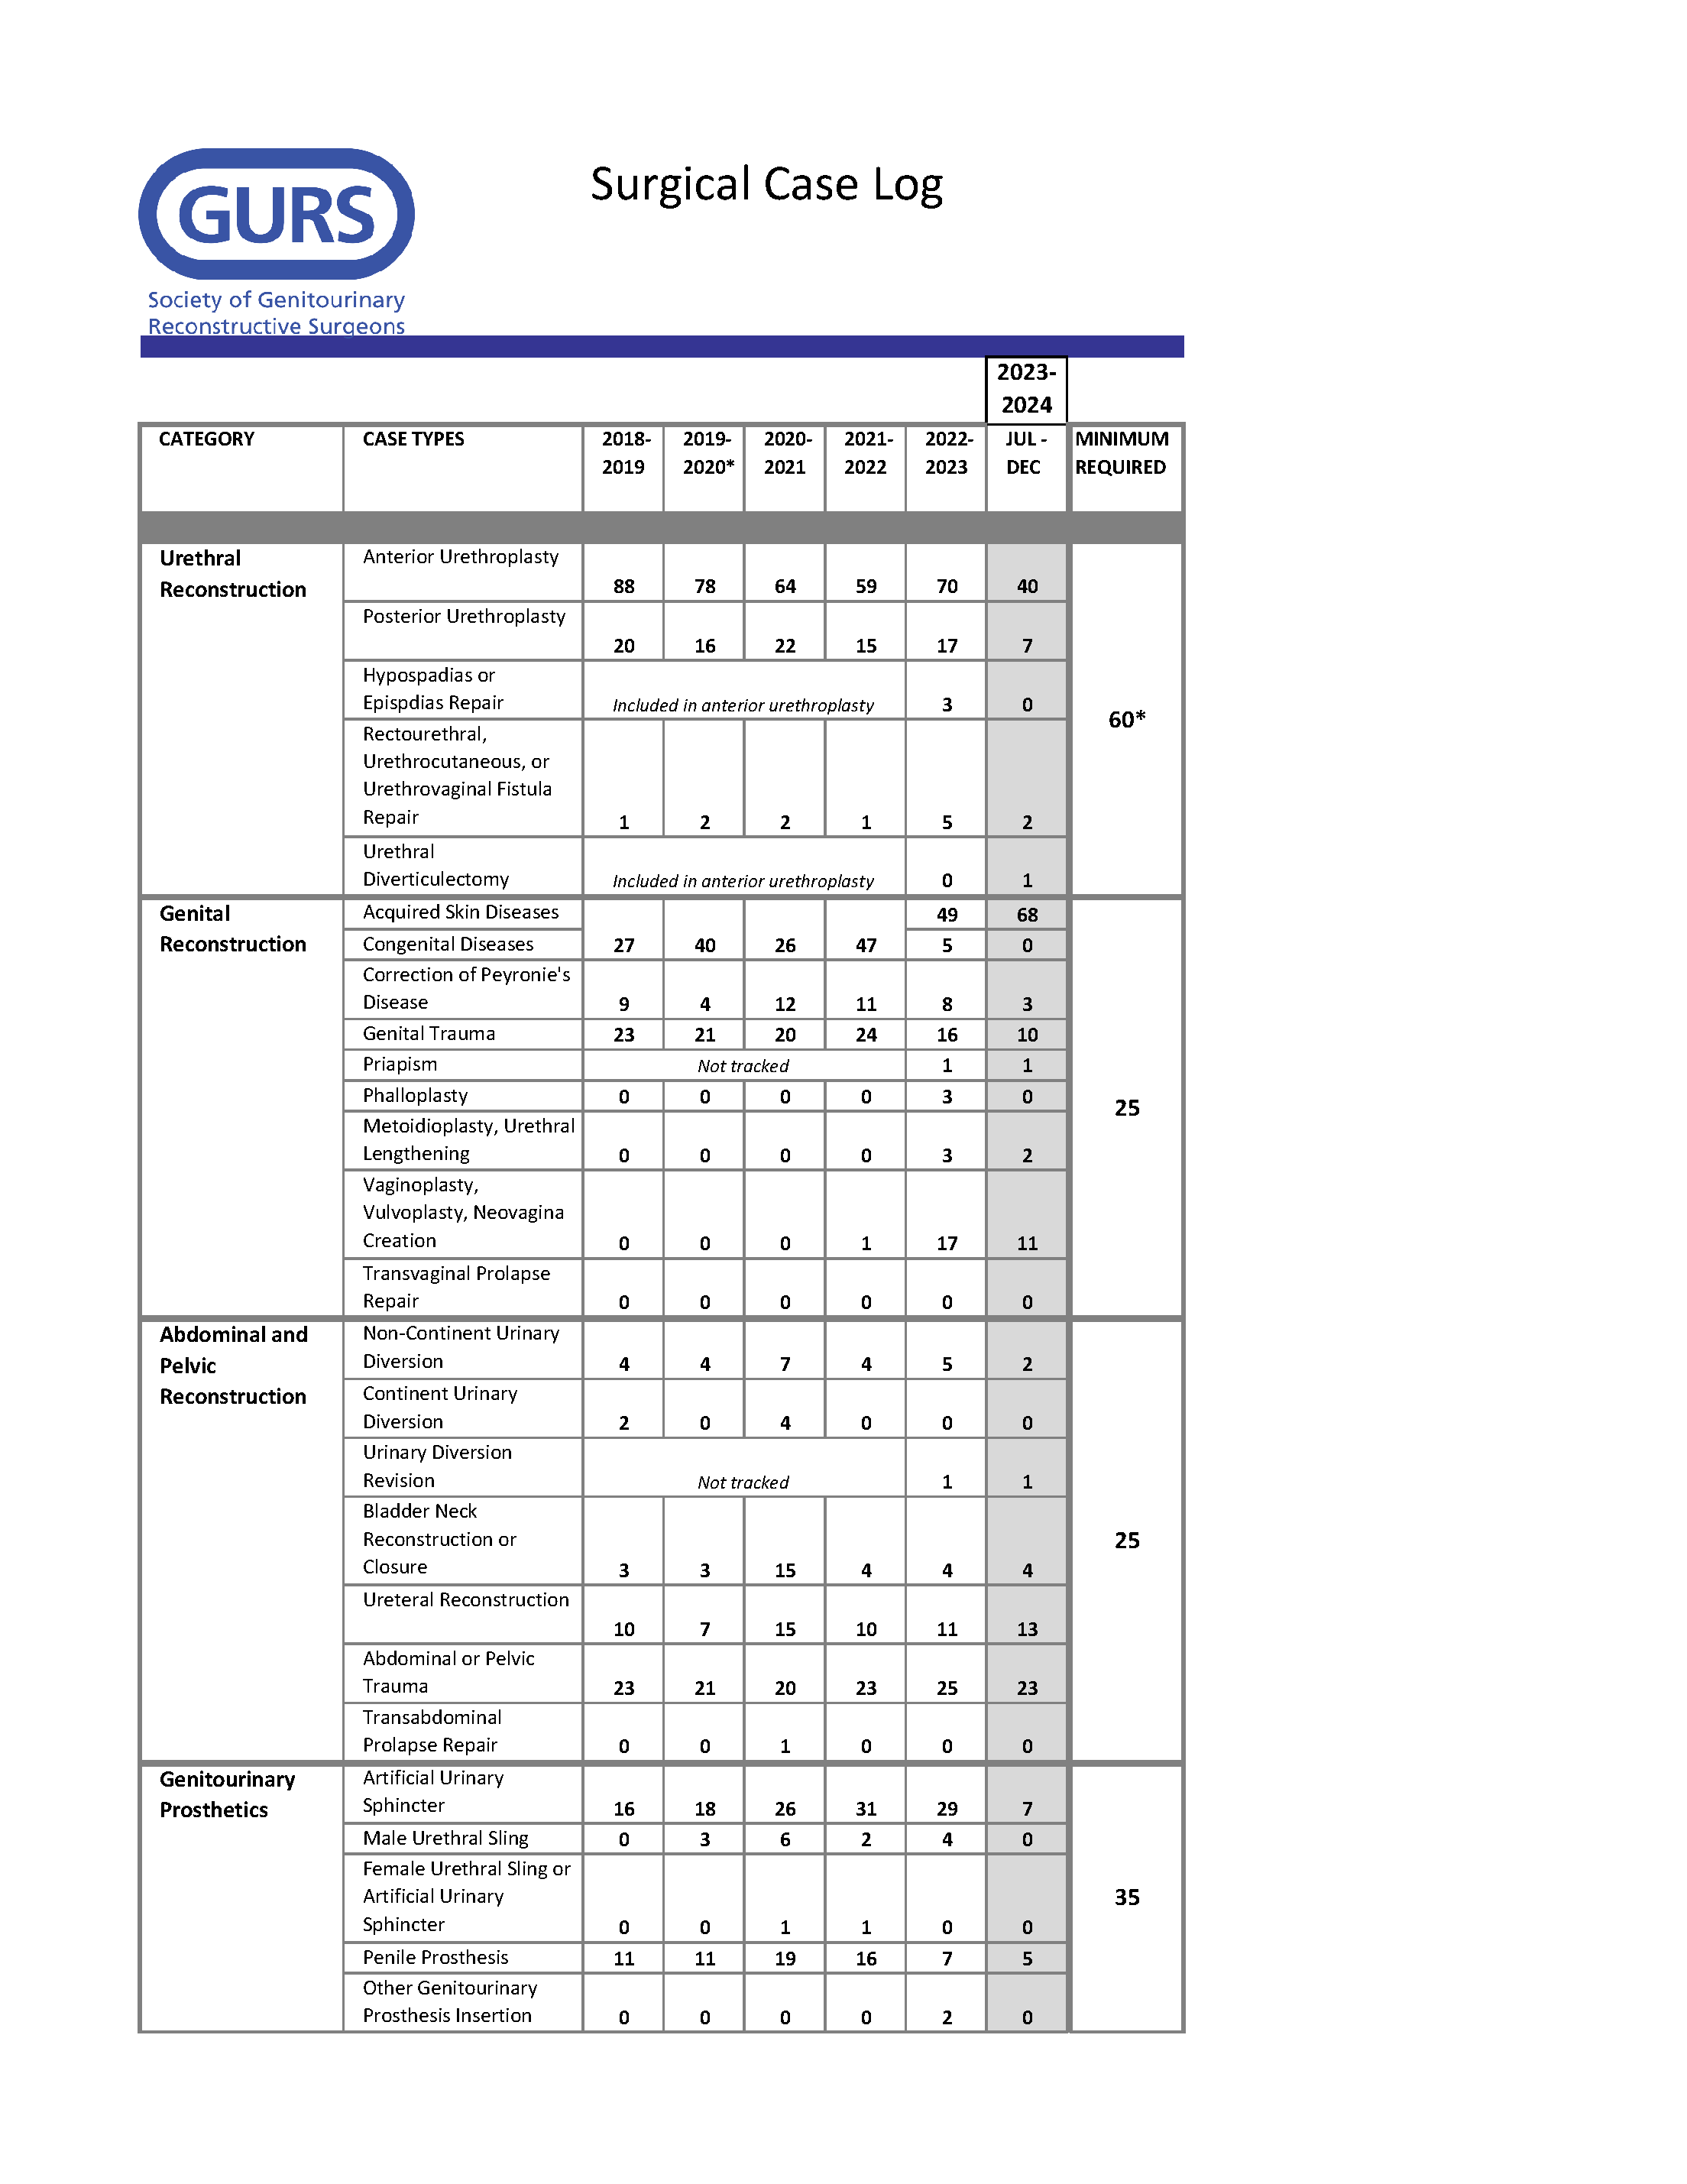 Clinical volume indicators